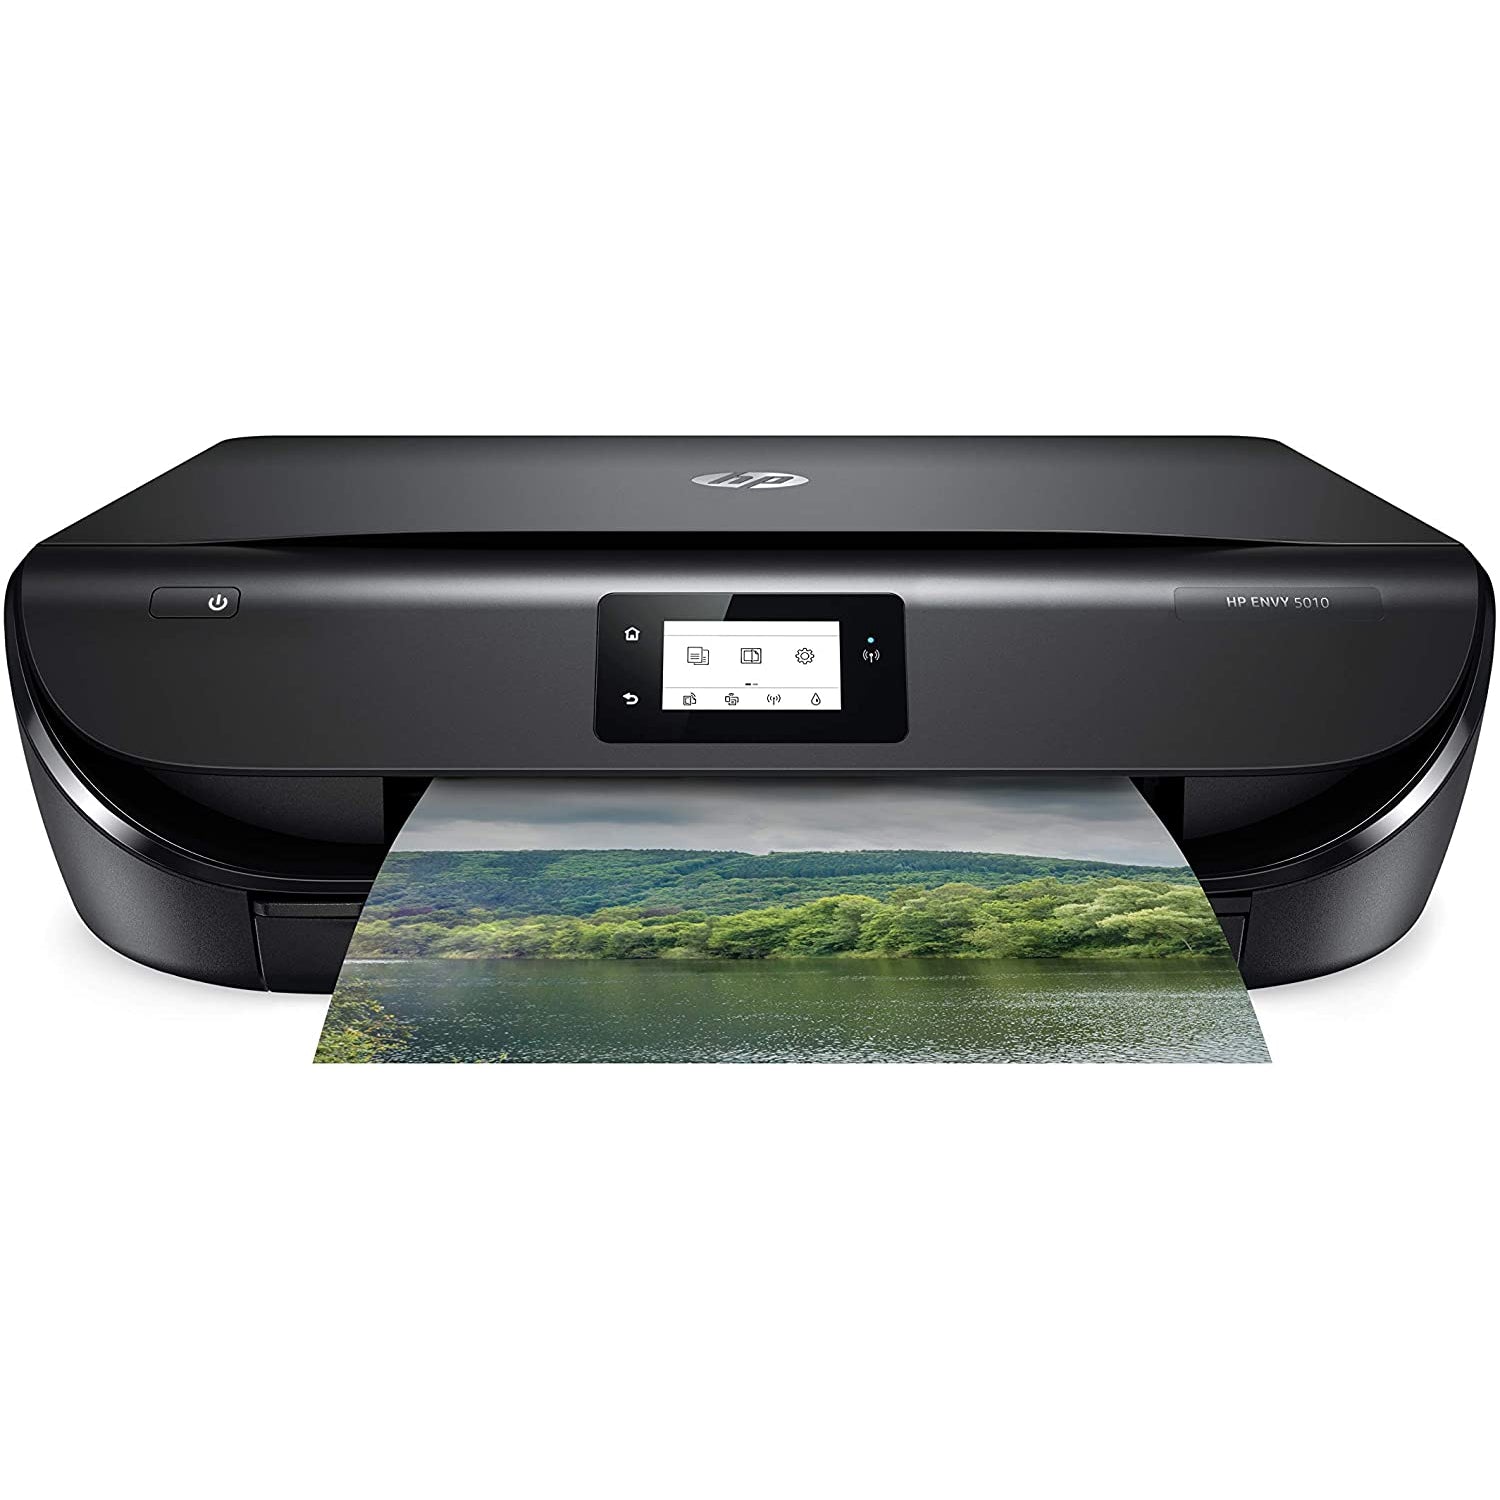 HP Envy 5010 All-in-One Printer - Black